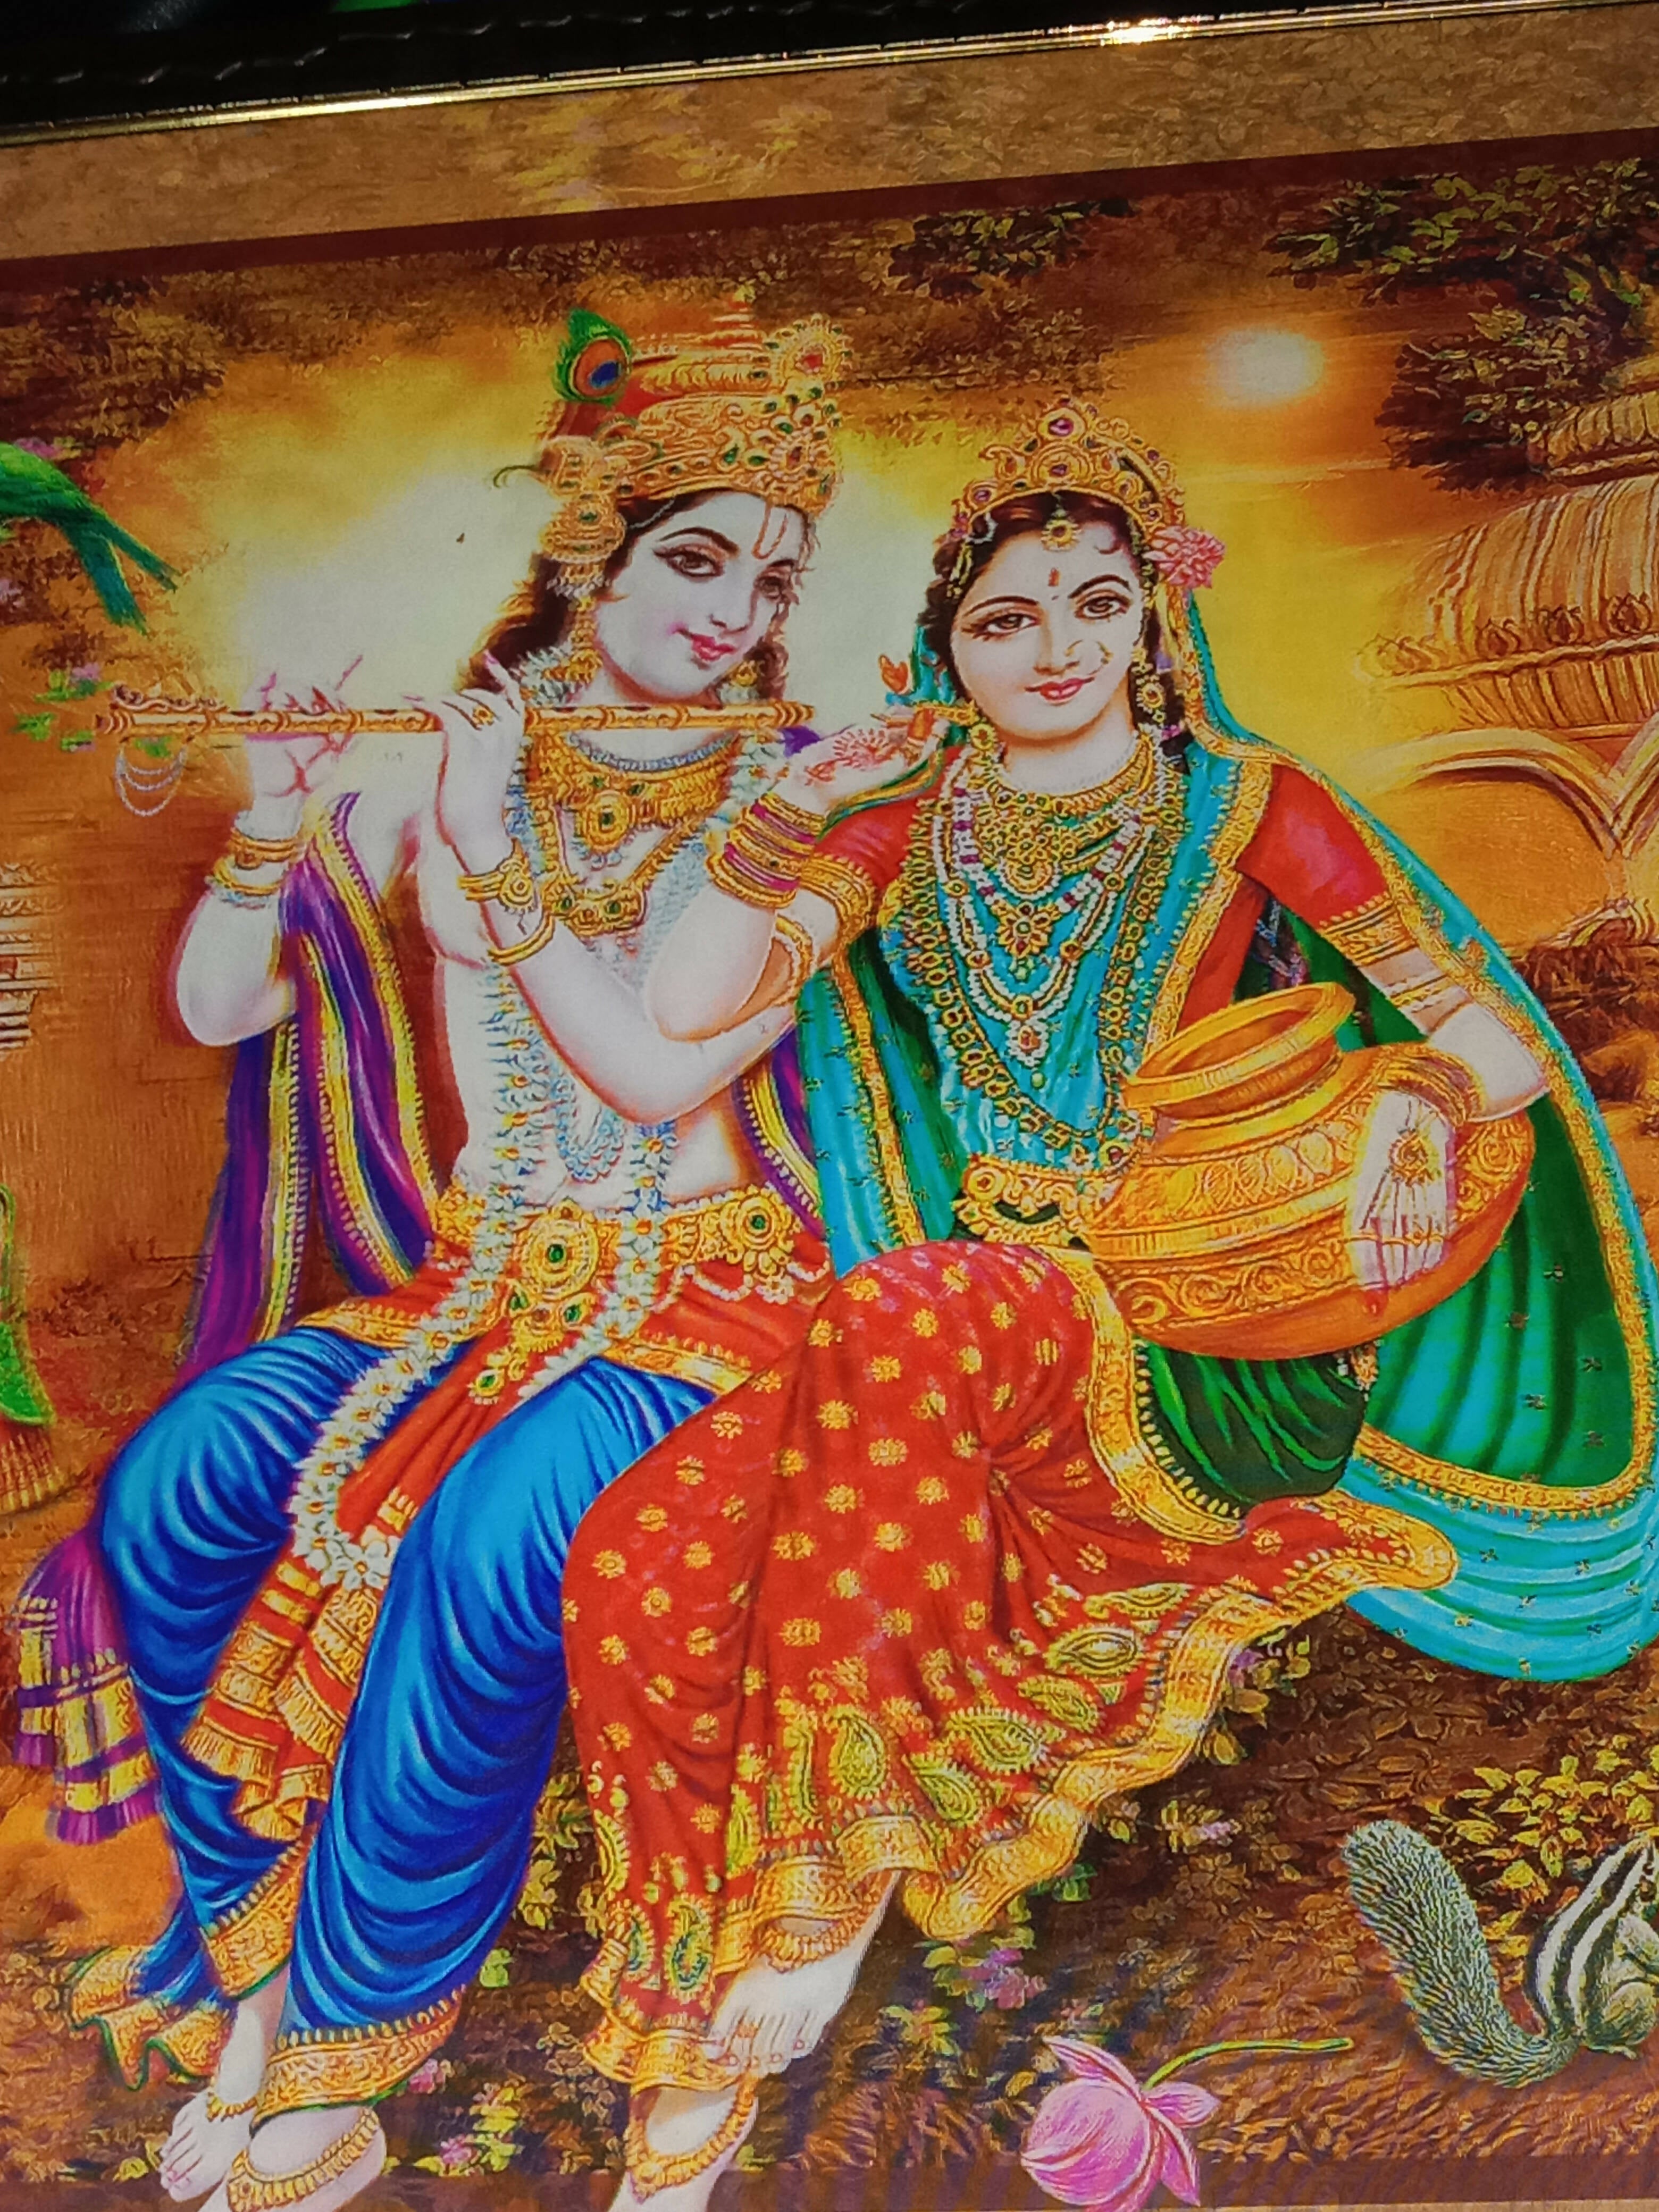 Radha krishna acrylic painting #size - 30x22 inches | Krishna painting, Krishna  radha painting, Diy canvas art painting